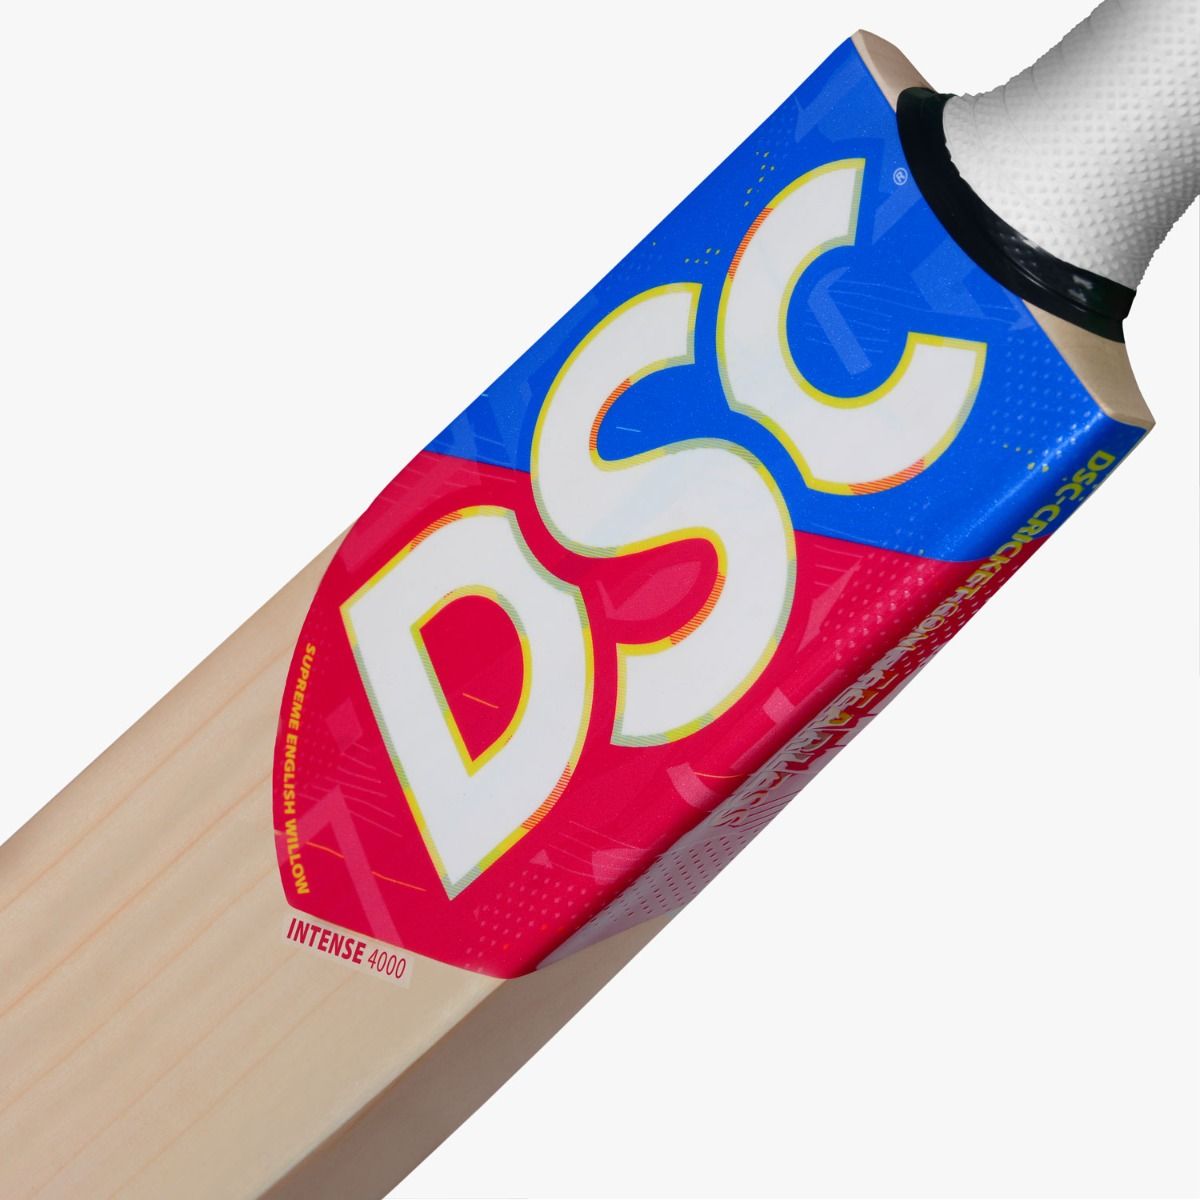 DSC Intense 4000 English Willow Harrow Bat